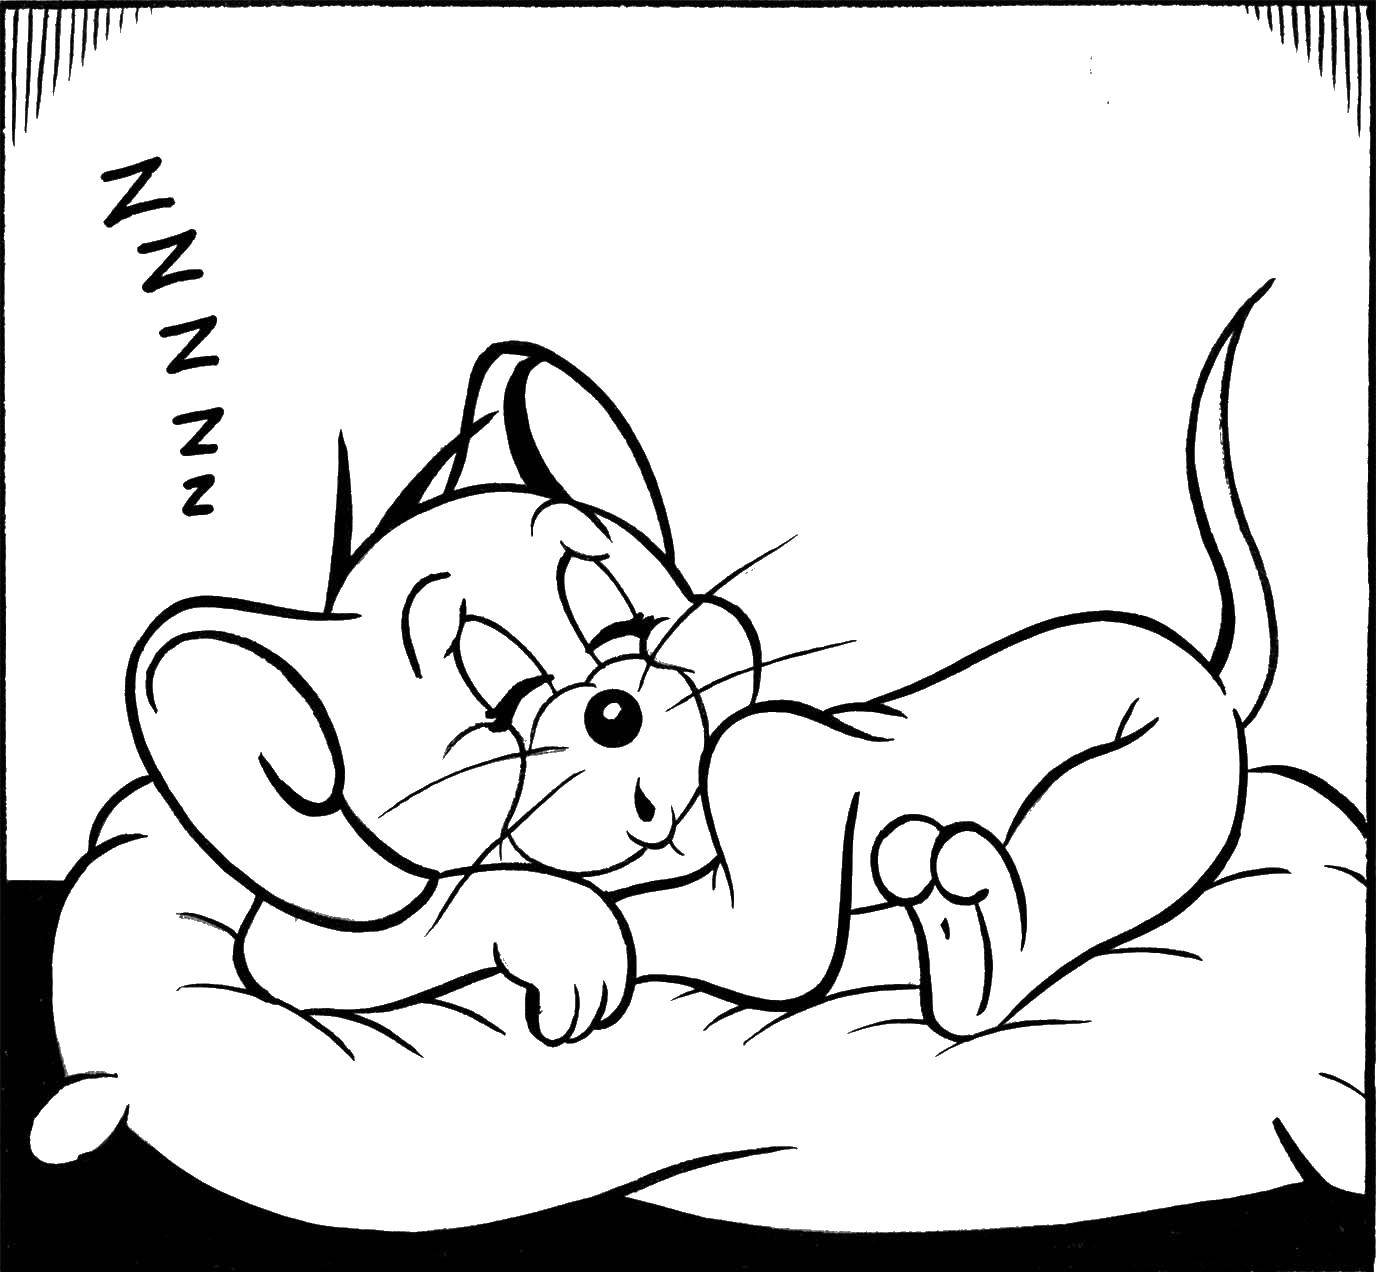 Coloring Sleeping Jerry. Category Disney cartoons. Tags:  cartoon mouse, Jerry.